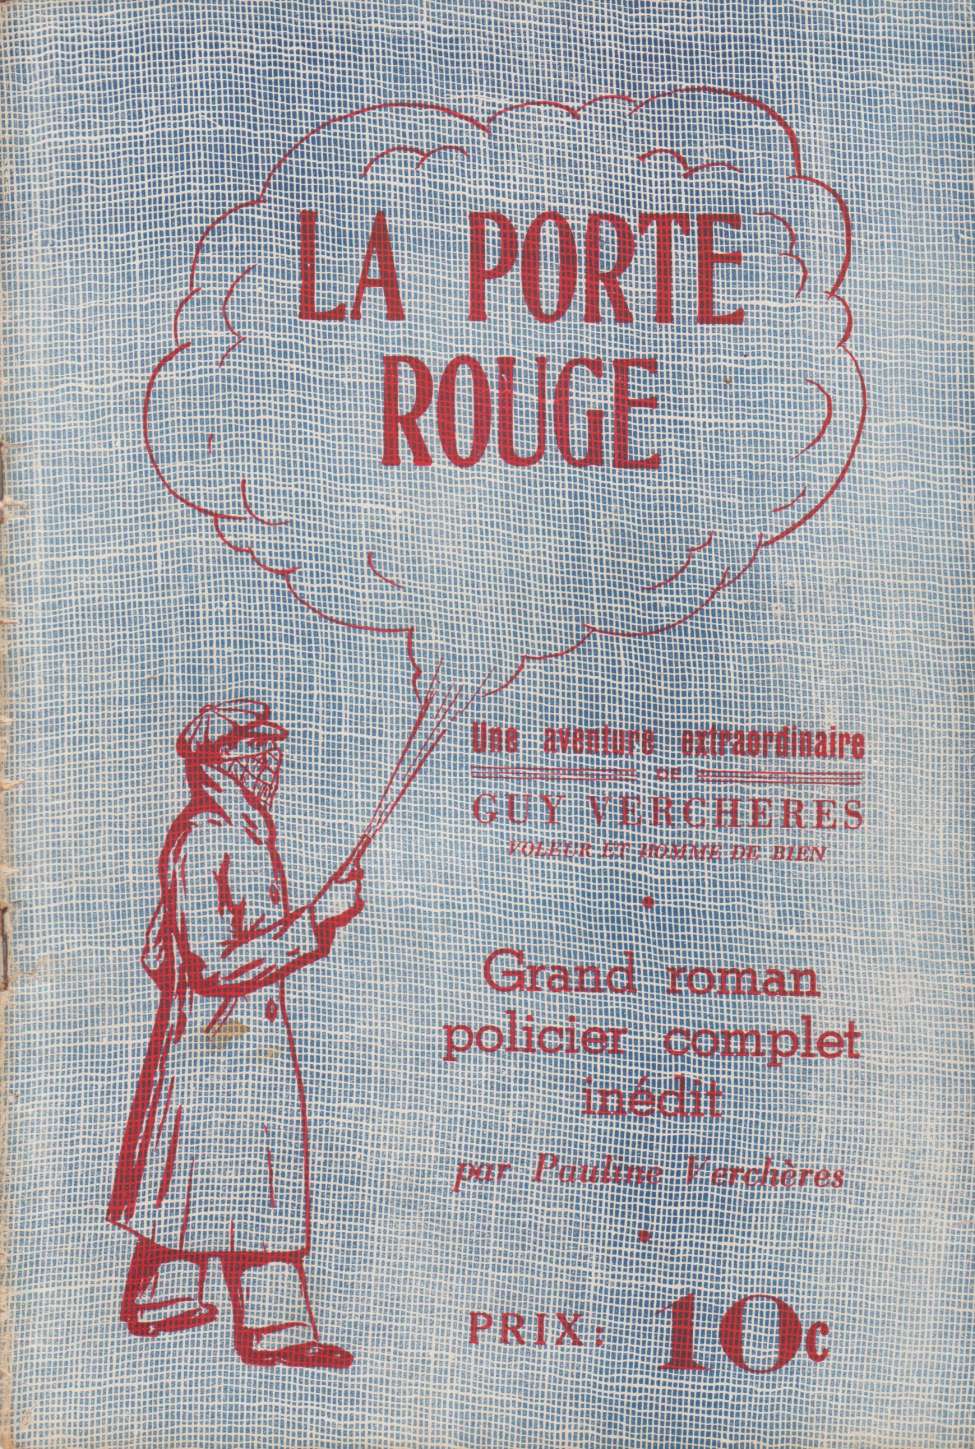 Book Cover For Guy Verchères v1 1 - La porte rouge